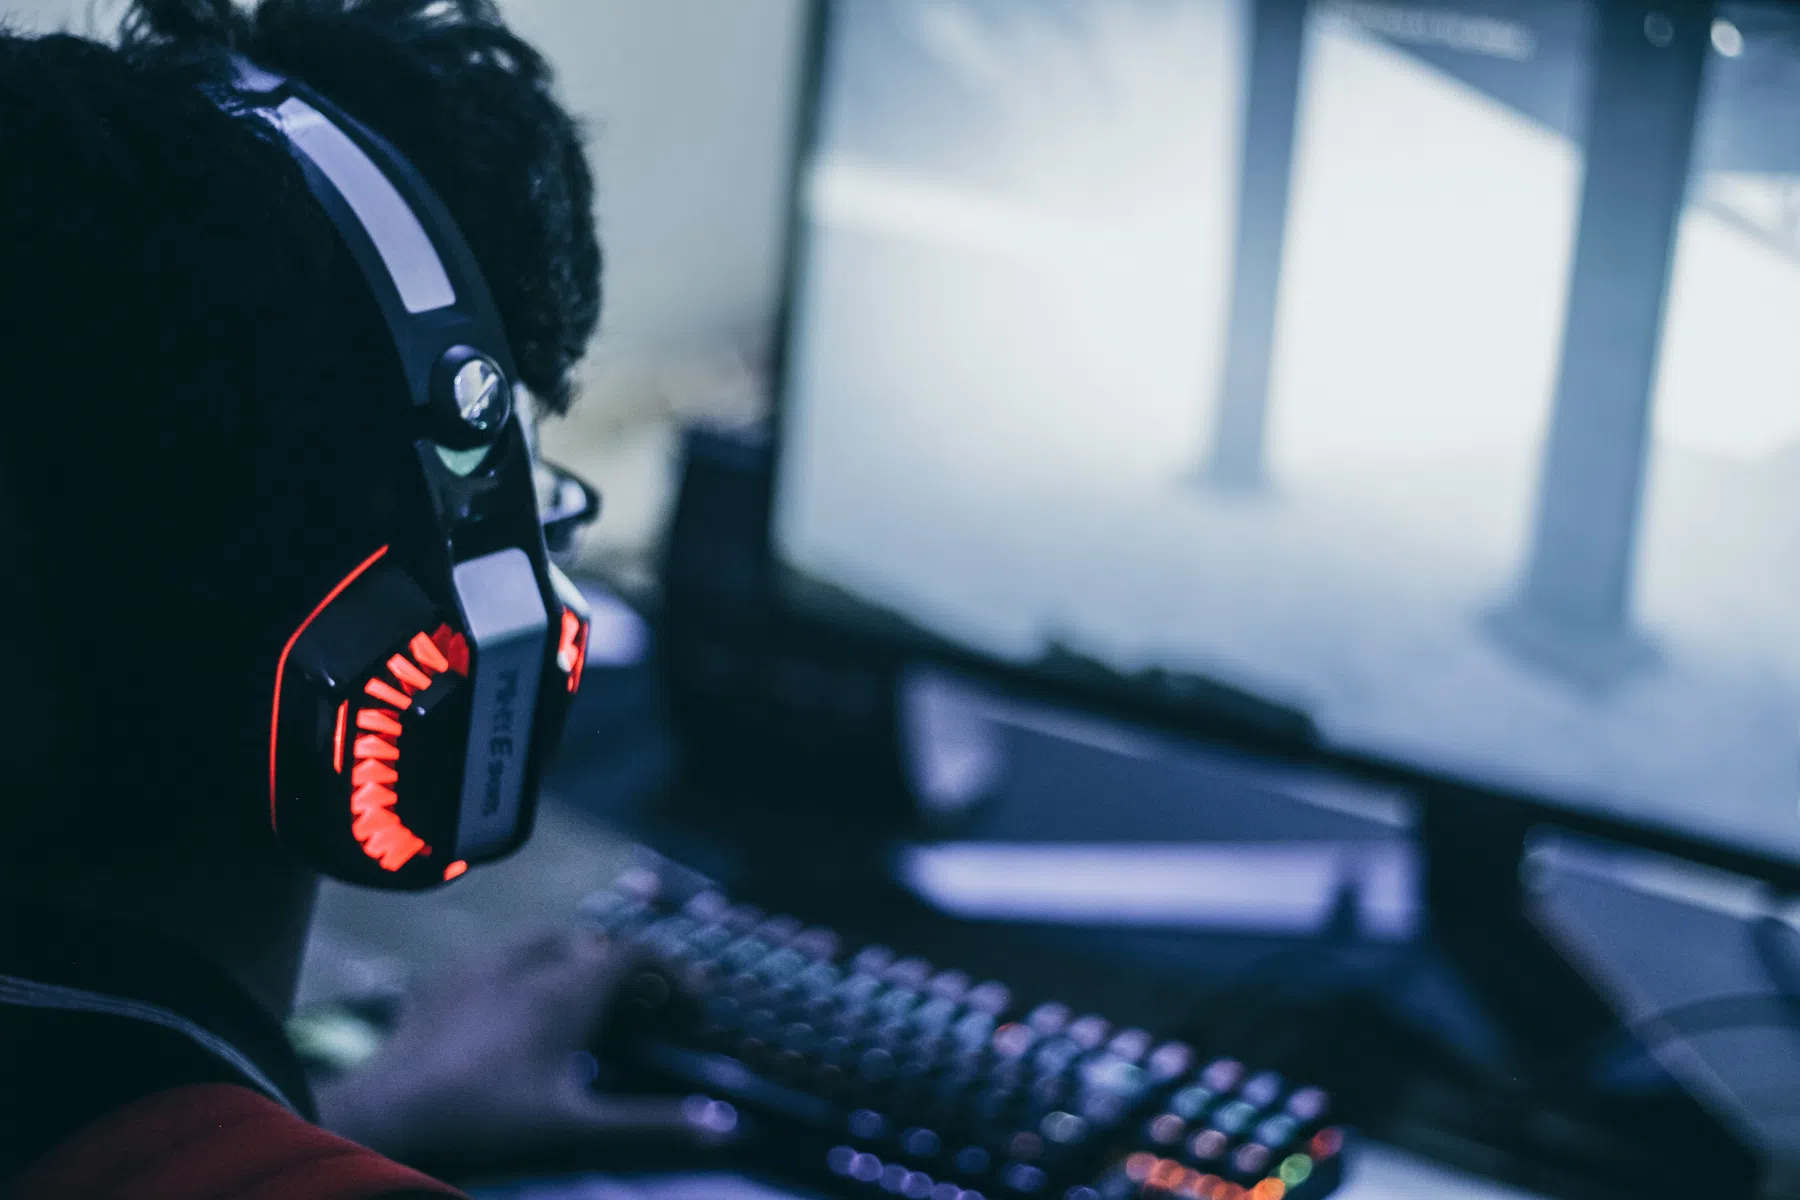 Groot risico op gehoorschade onder gamers: 'vaak het geluid te hard staan'